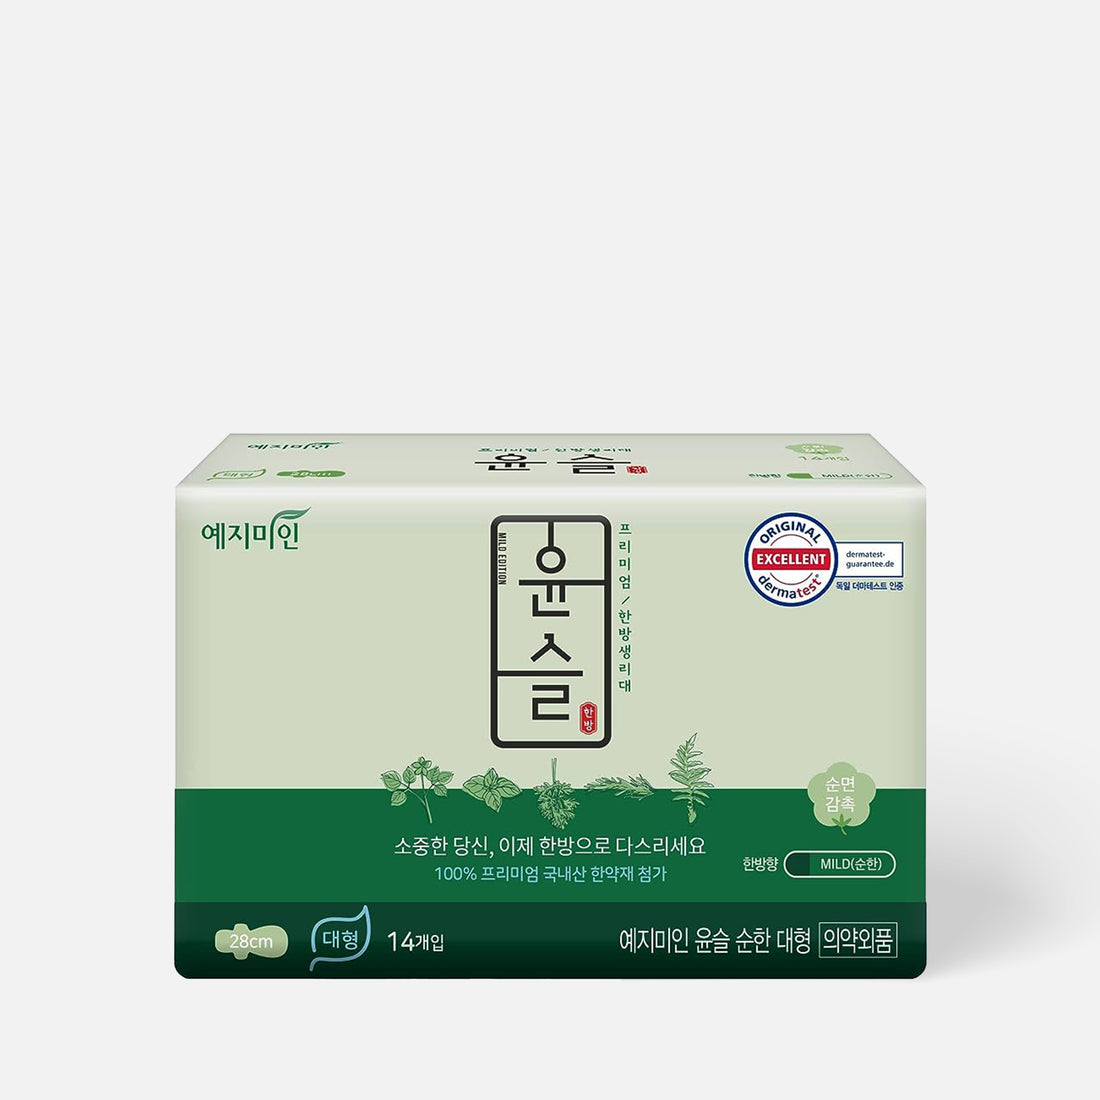 YEJIMIIN Sanitary Pads Cotton Touch Mild Herb (Large) 280mm 14pcs